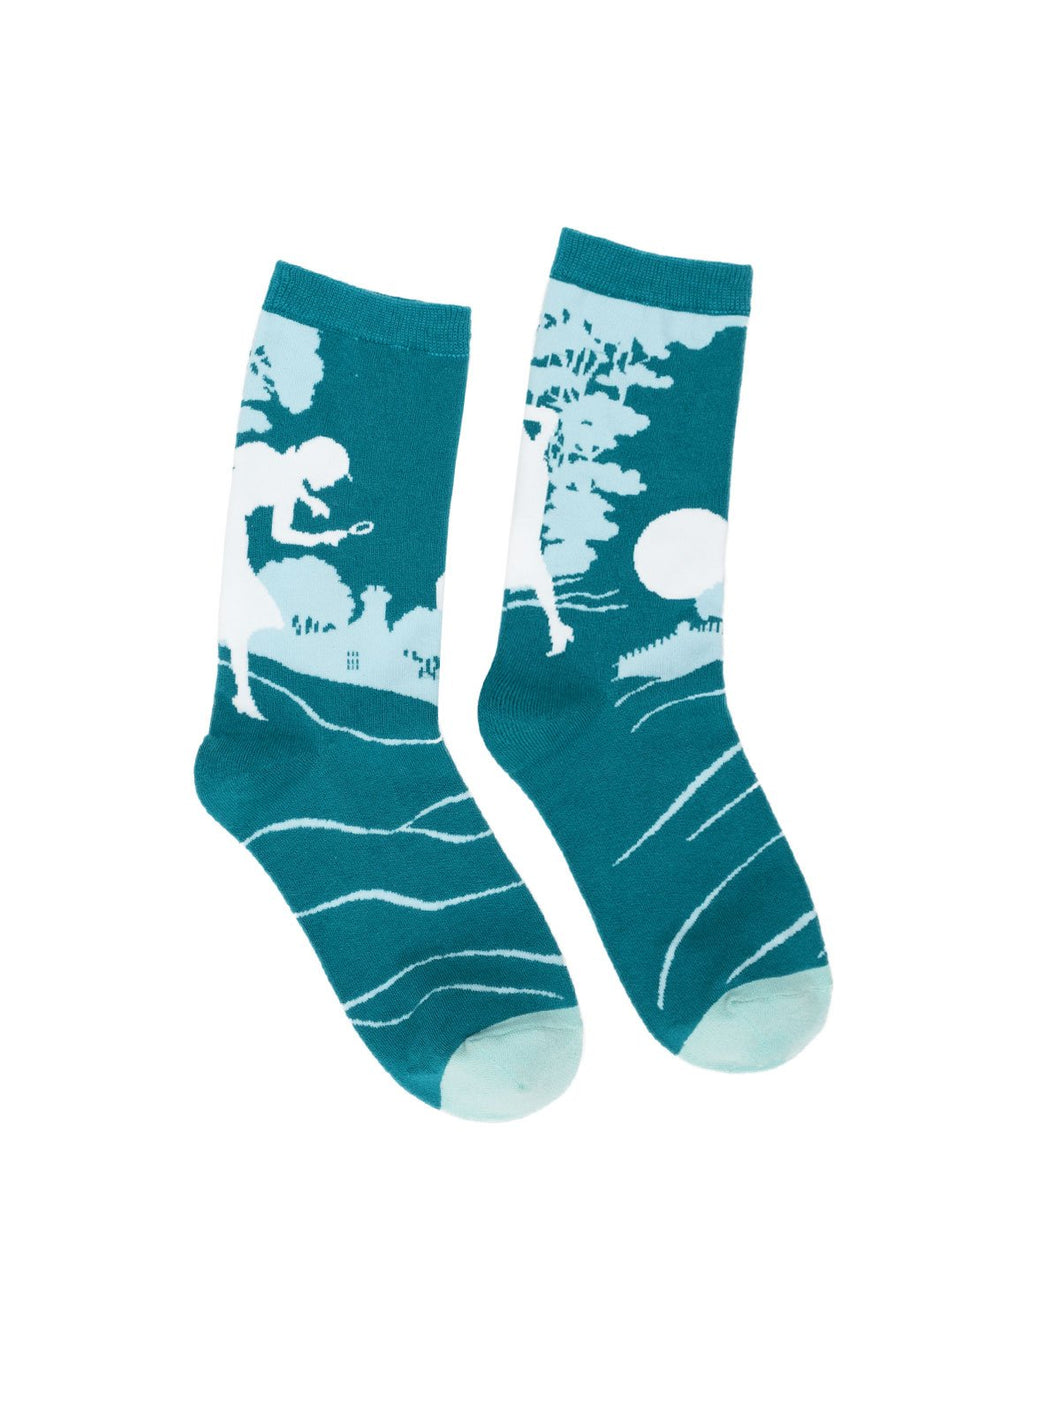 Nancy Drew Socks (Adult)